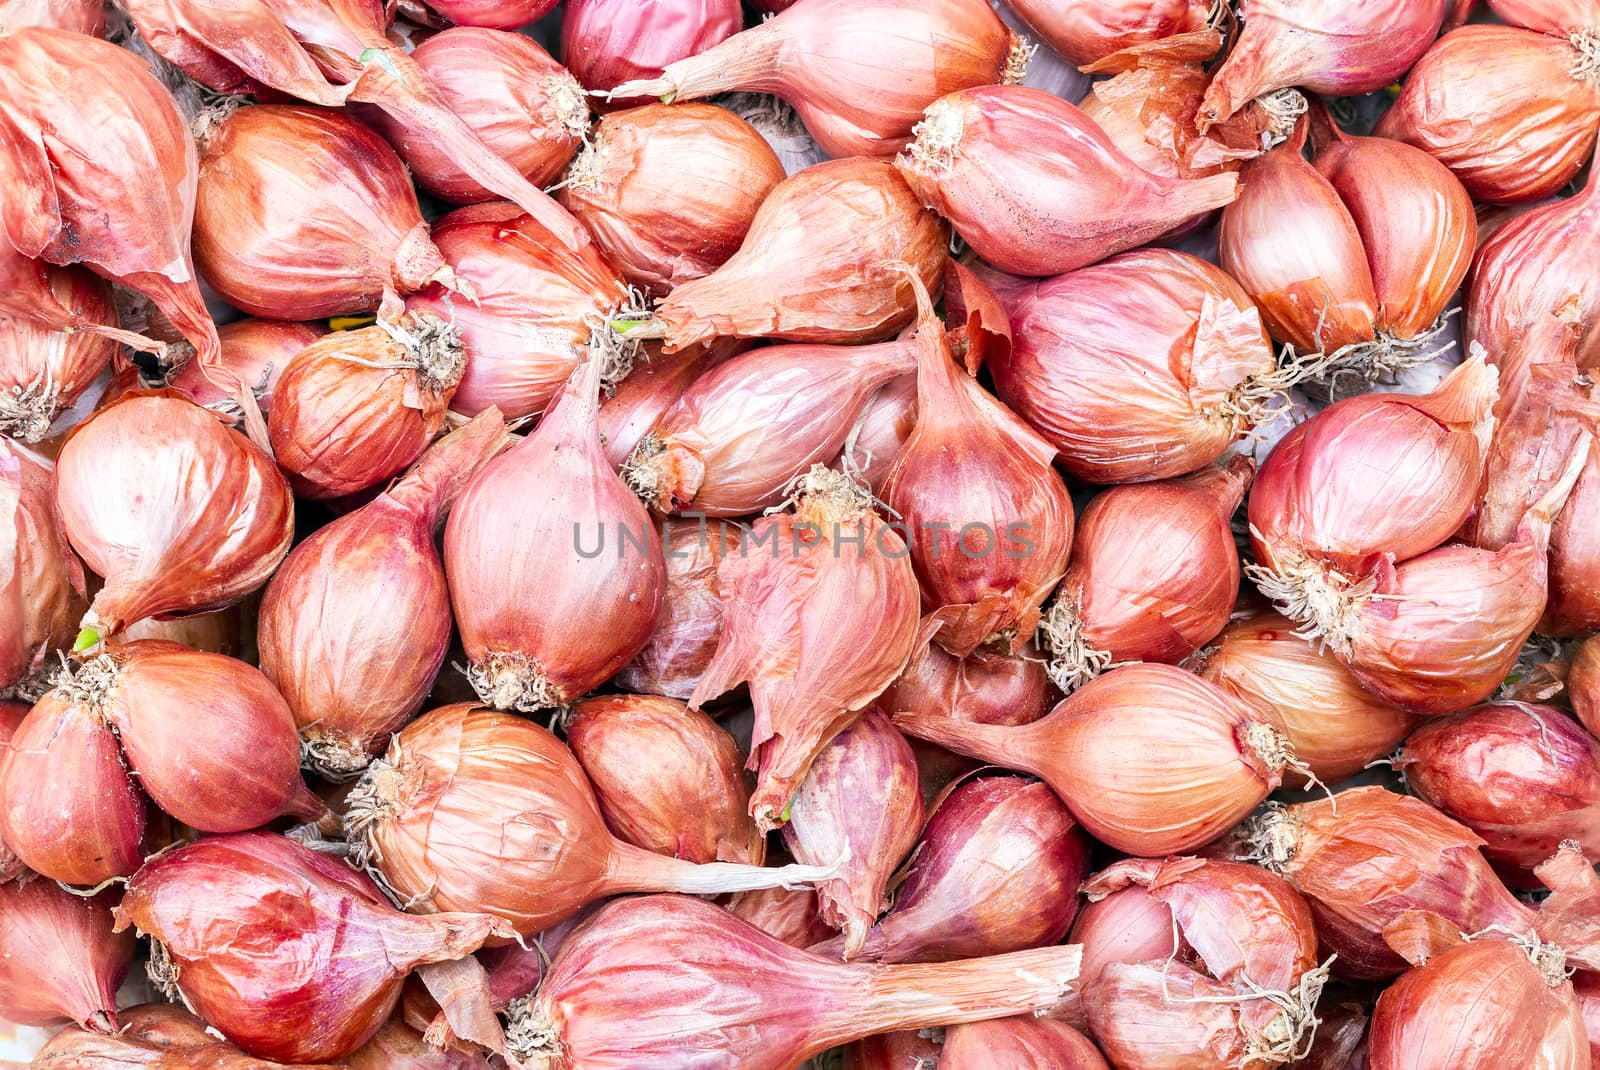 Shallot - asia red onion in market - Allium ascalonicum.